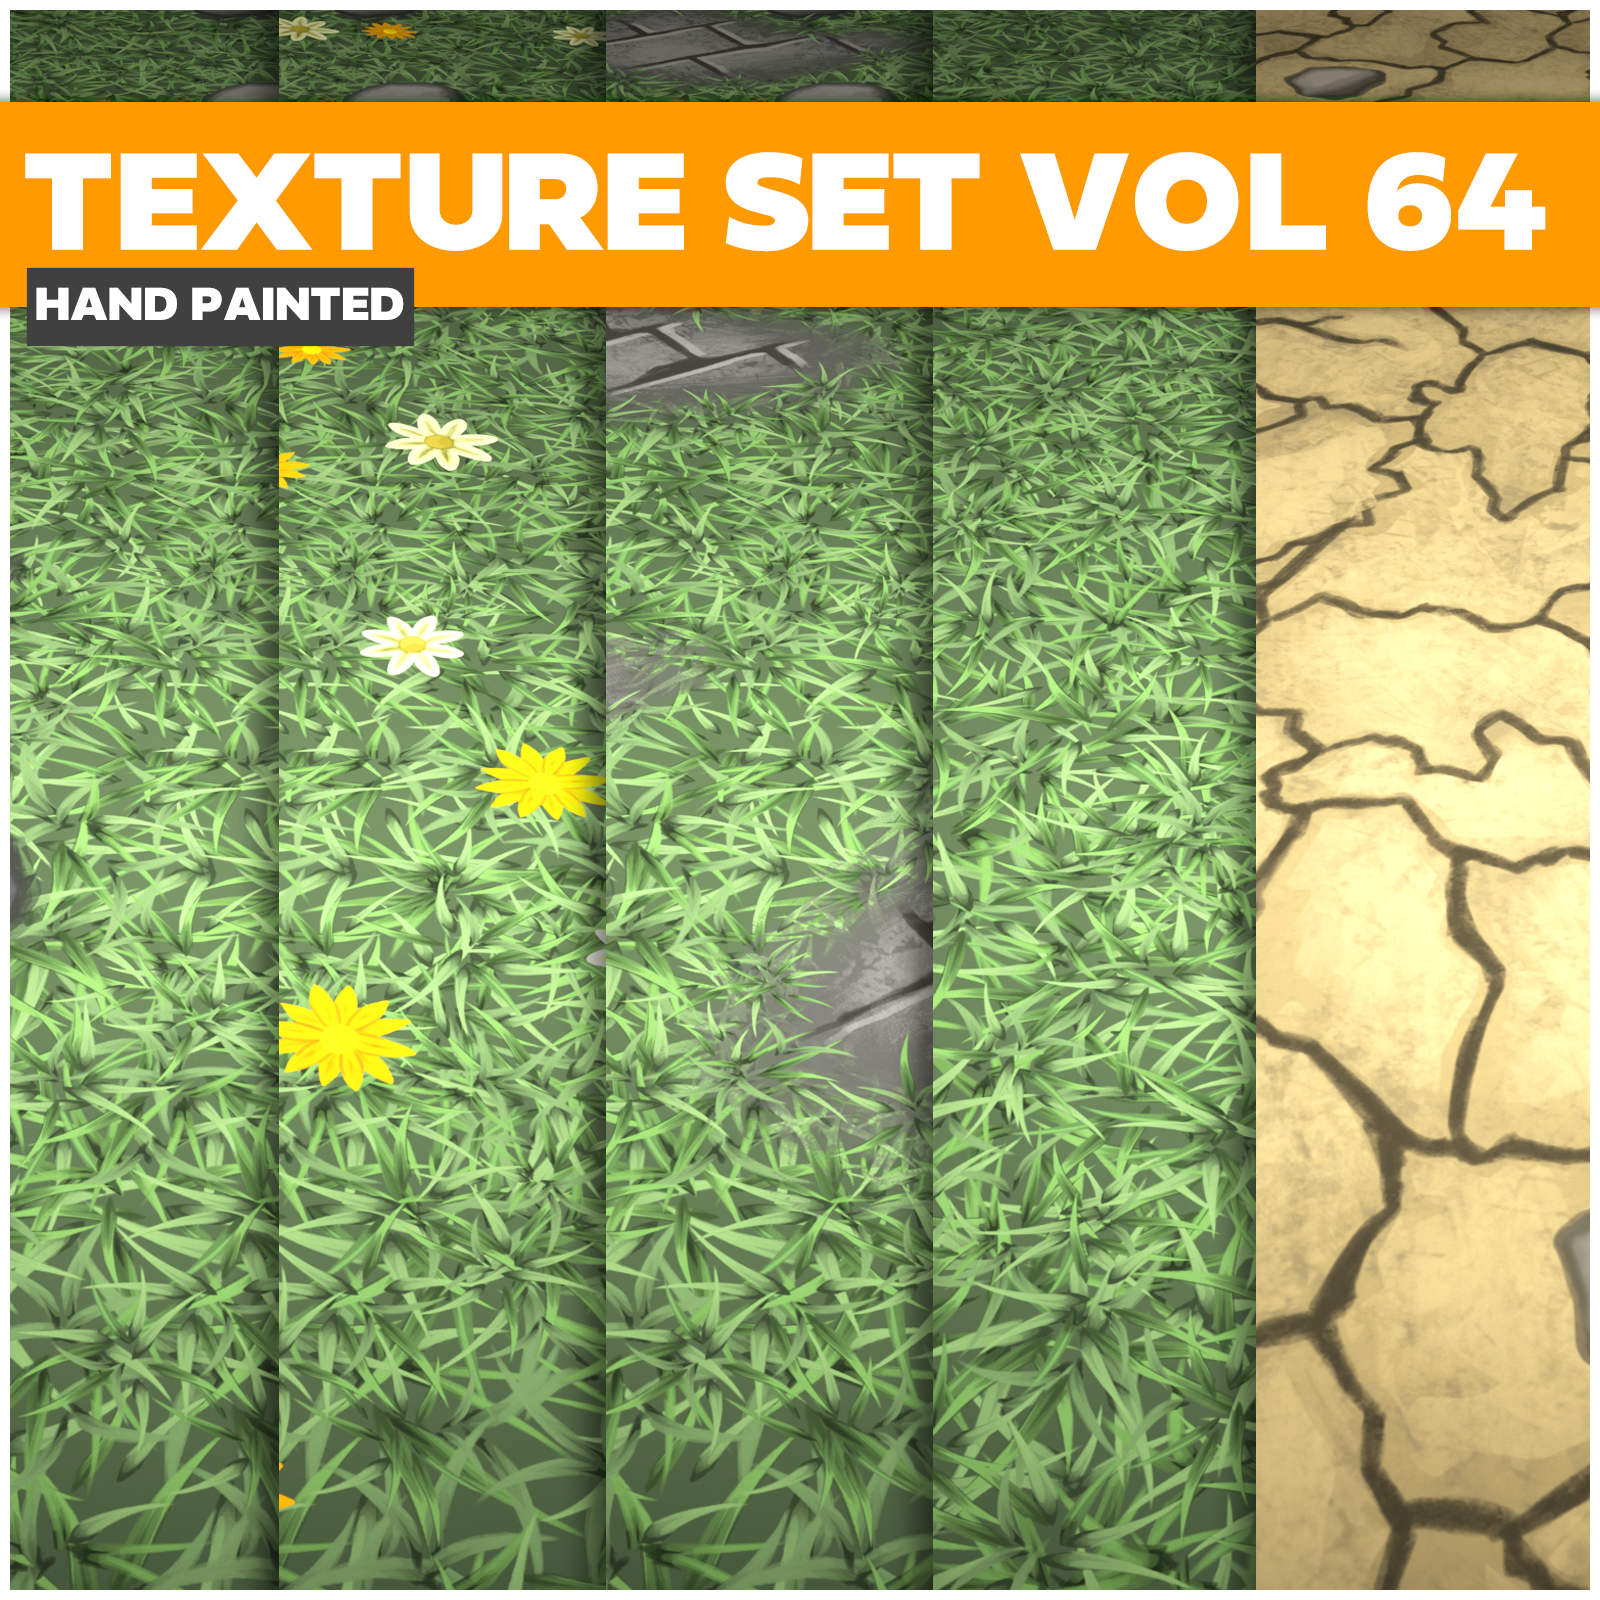 Grass Vol.64 - Game PBR Textures - LowlyPoly